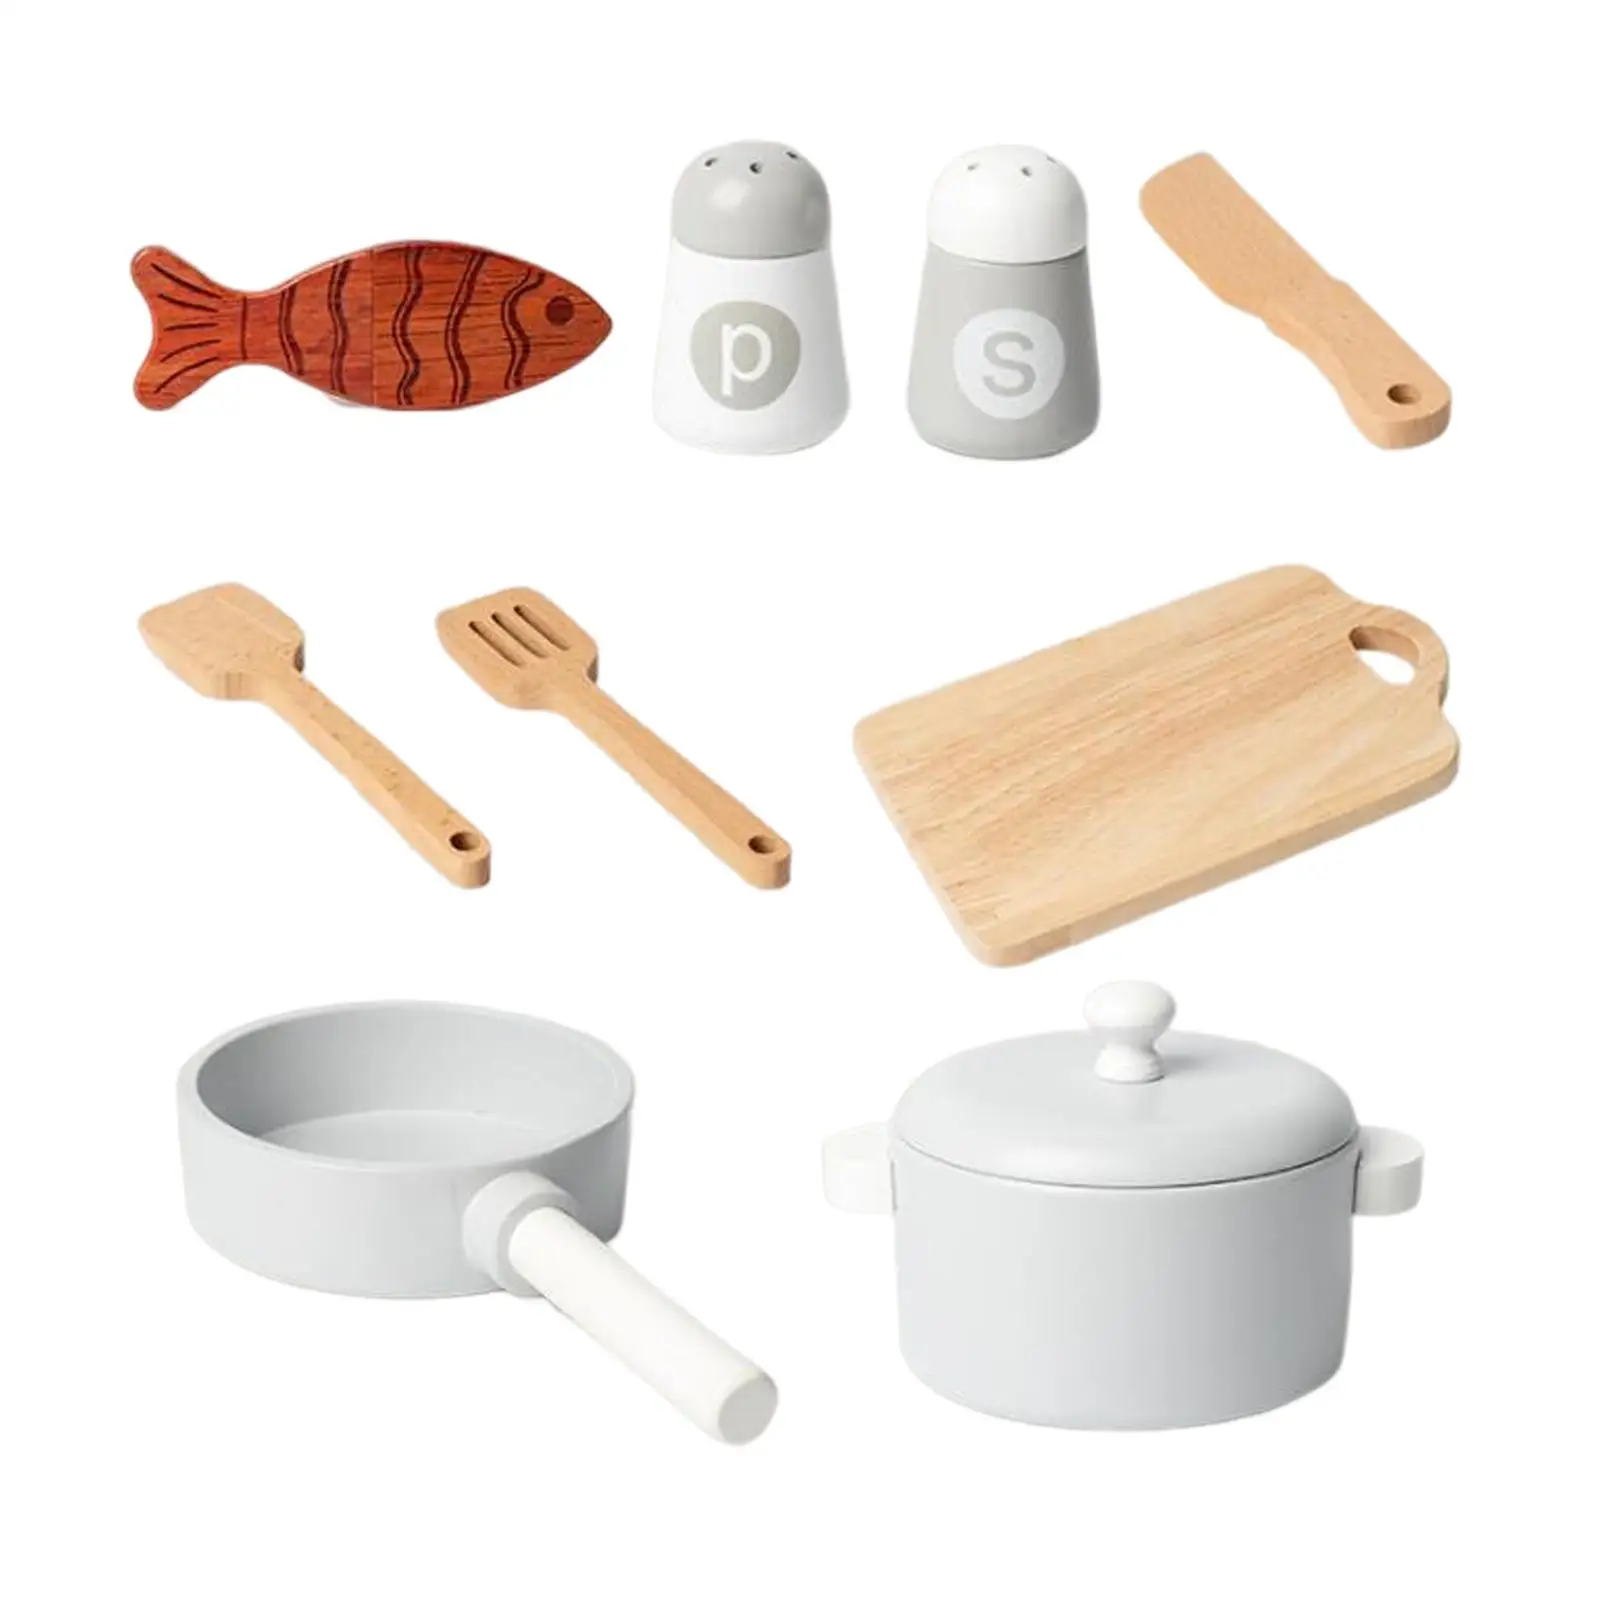 kitchen Set Mini Wooden Play Kitchen Accessories DIY Simulation for Kids